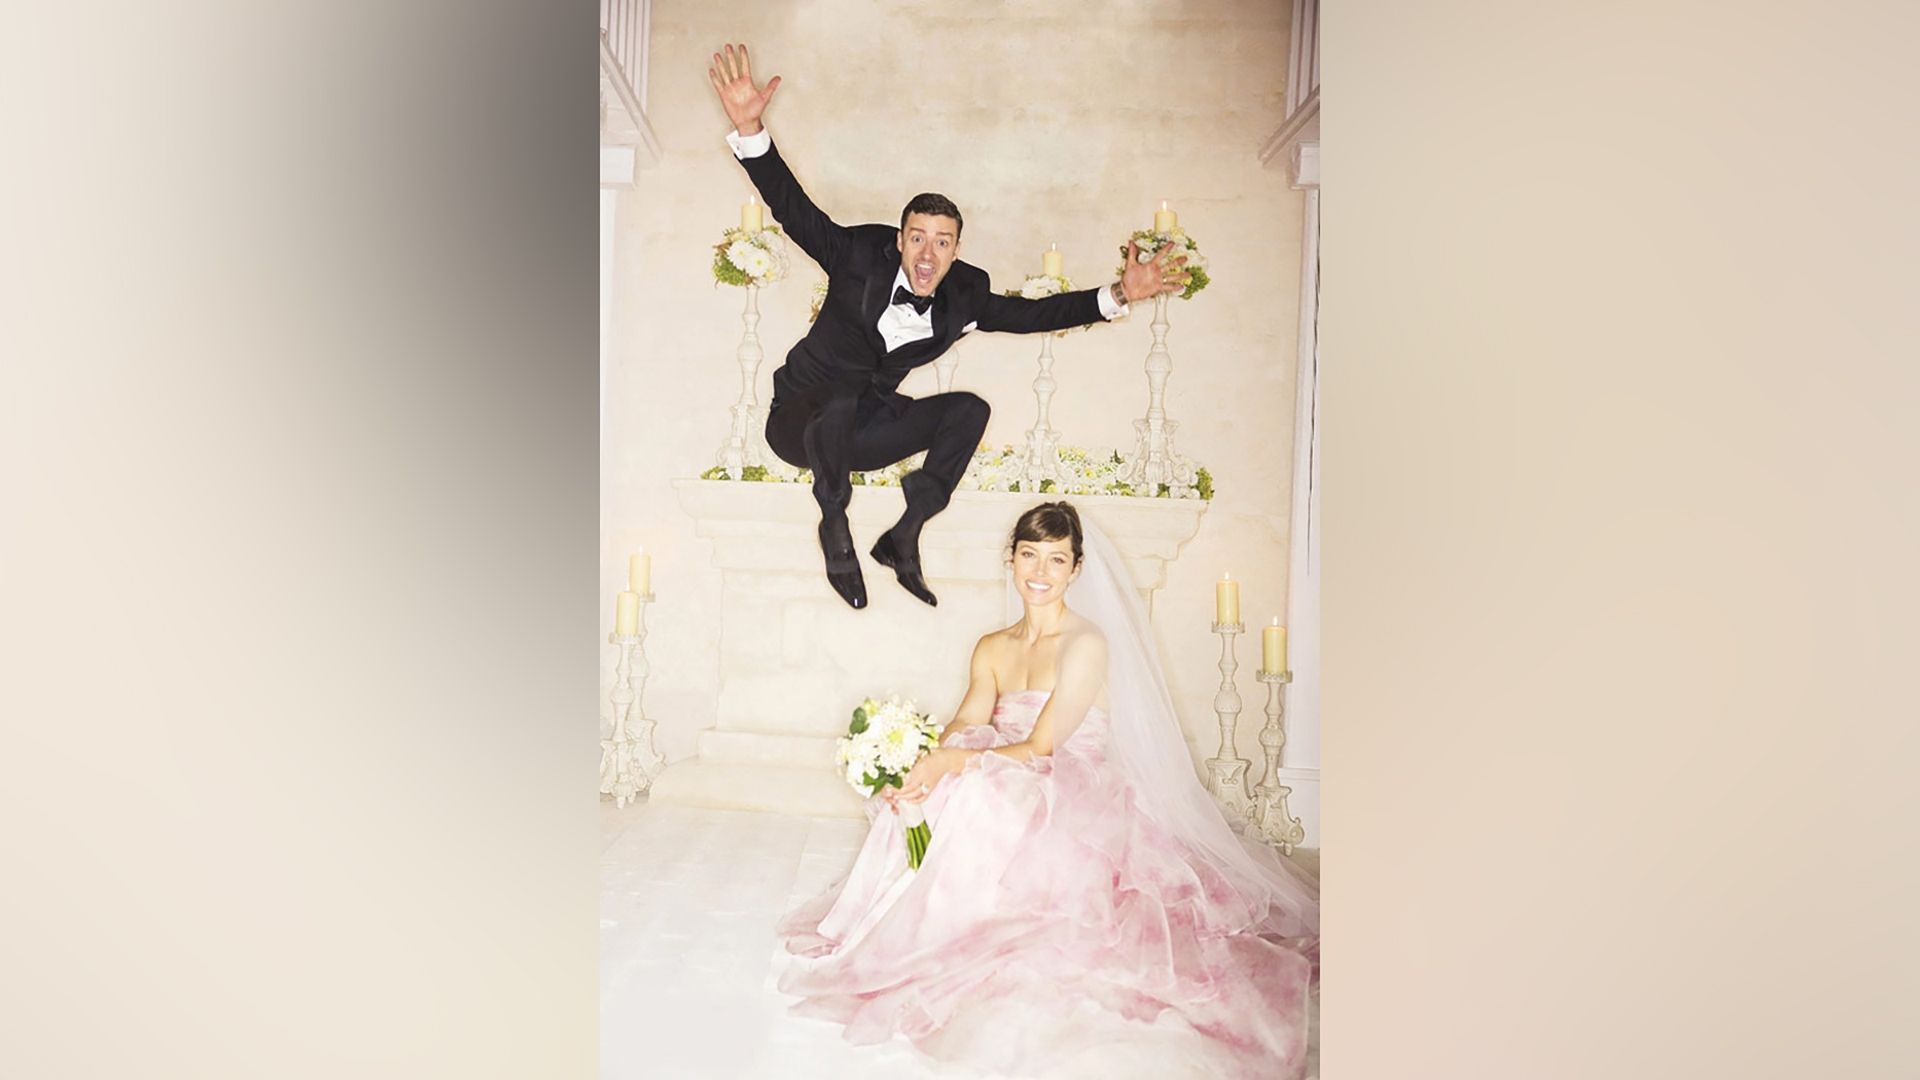 The wedding of Jessica Biel and Justin Timberlake